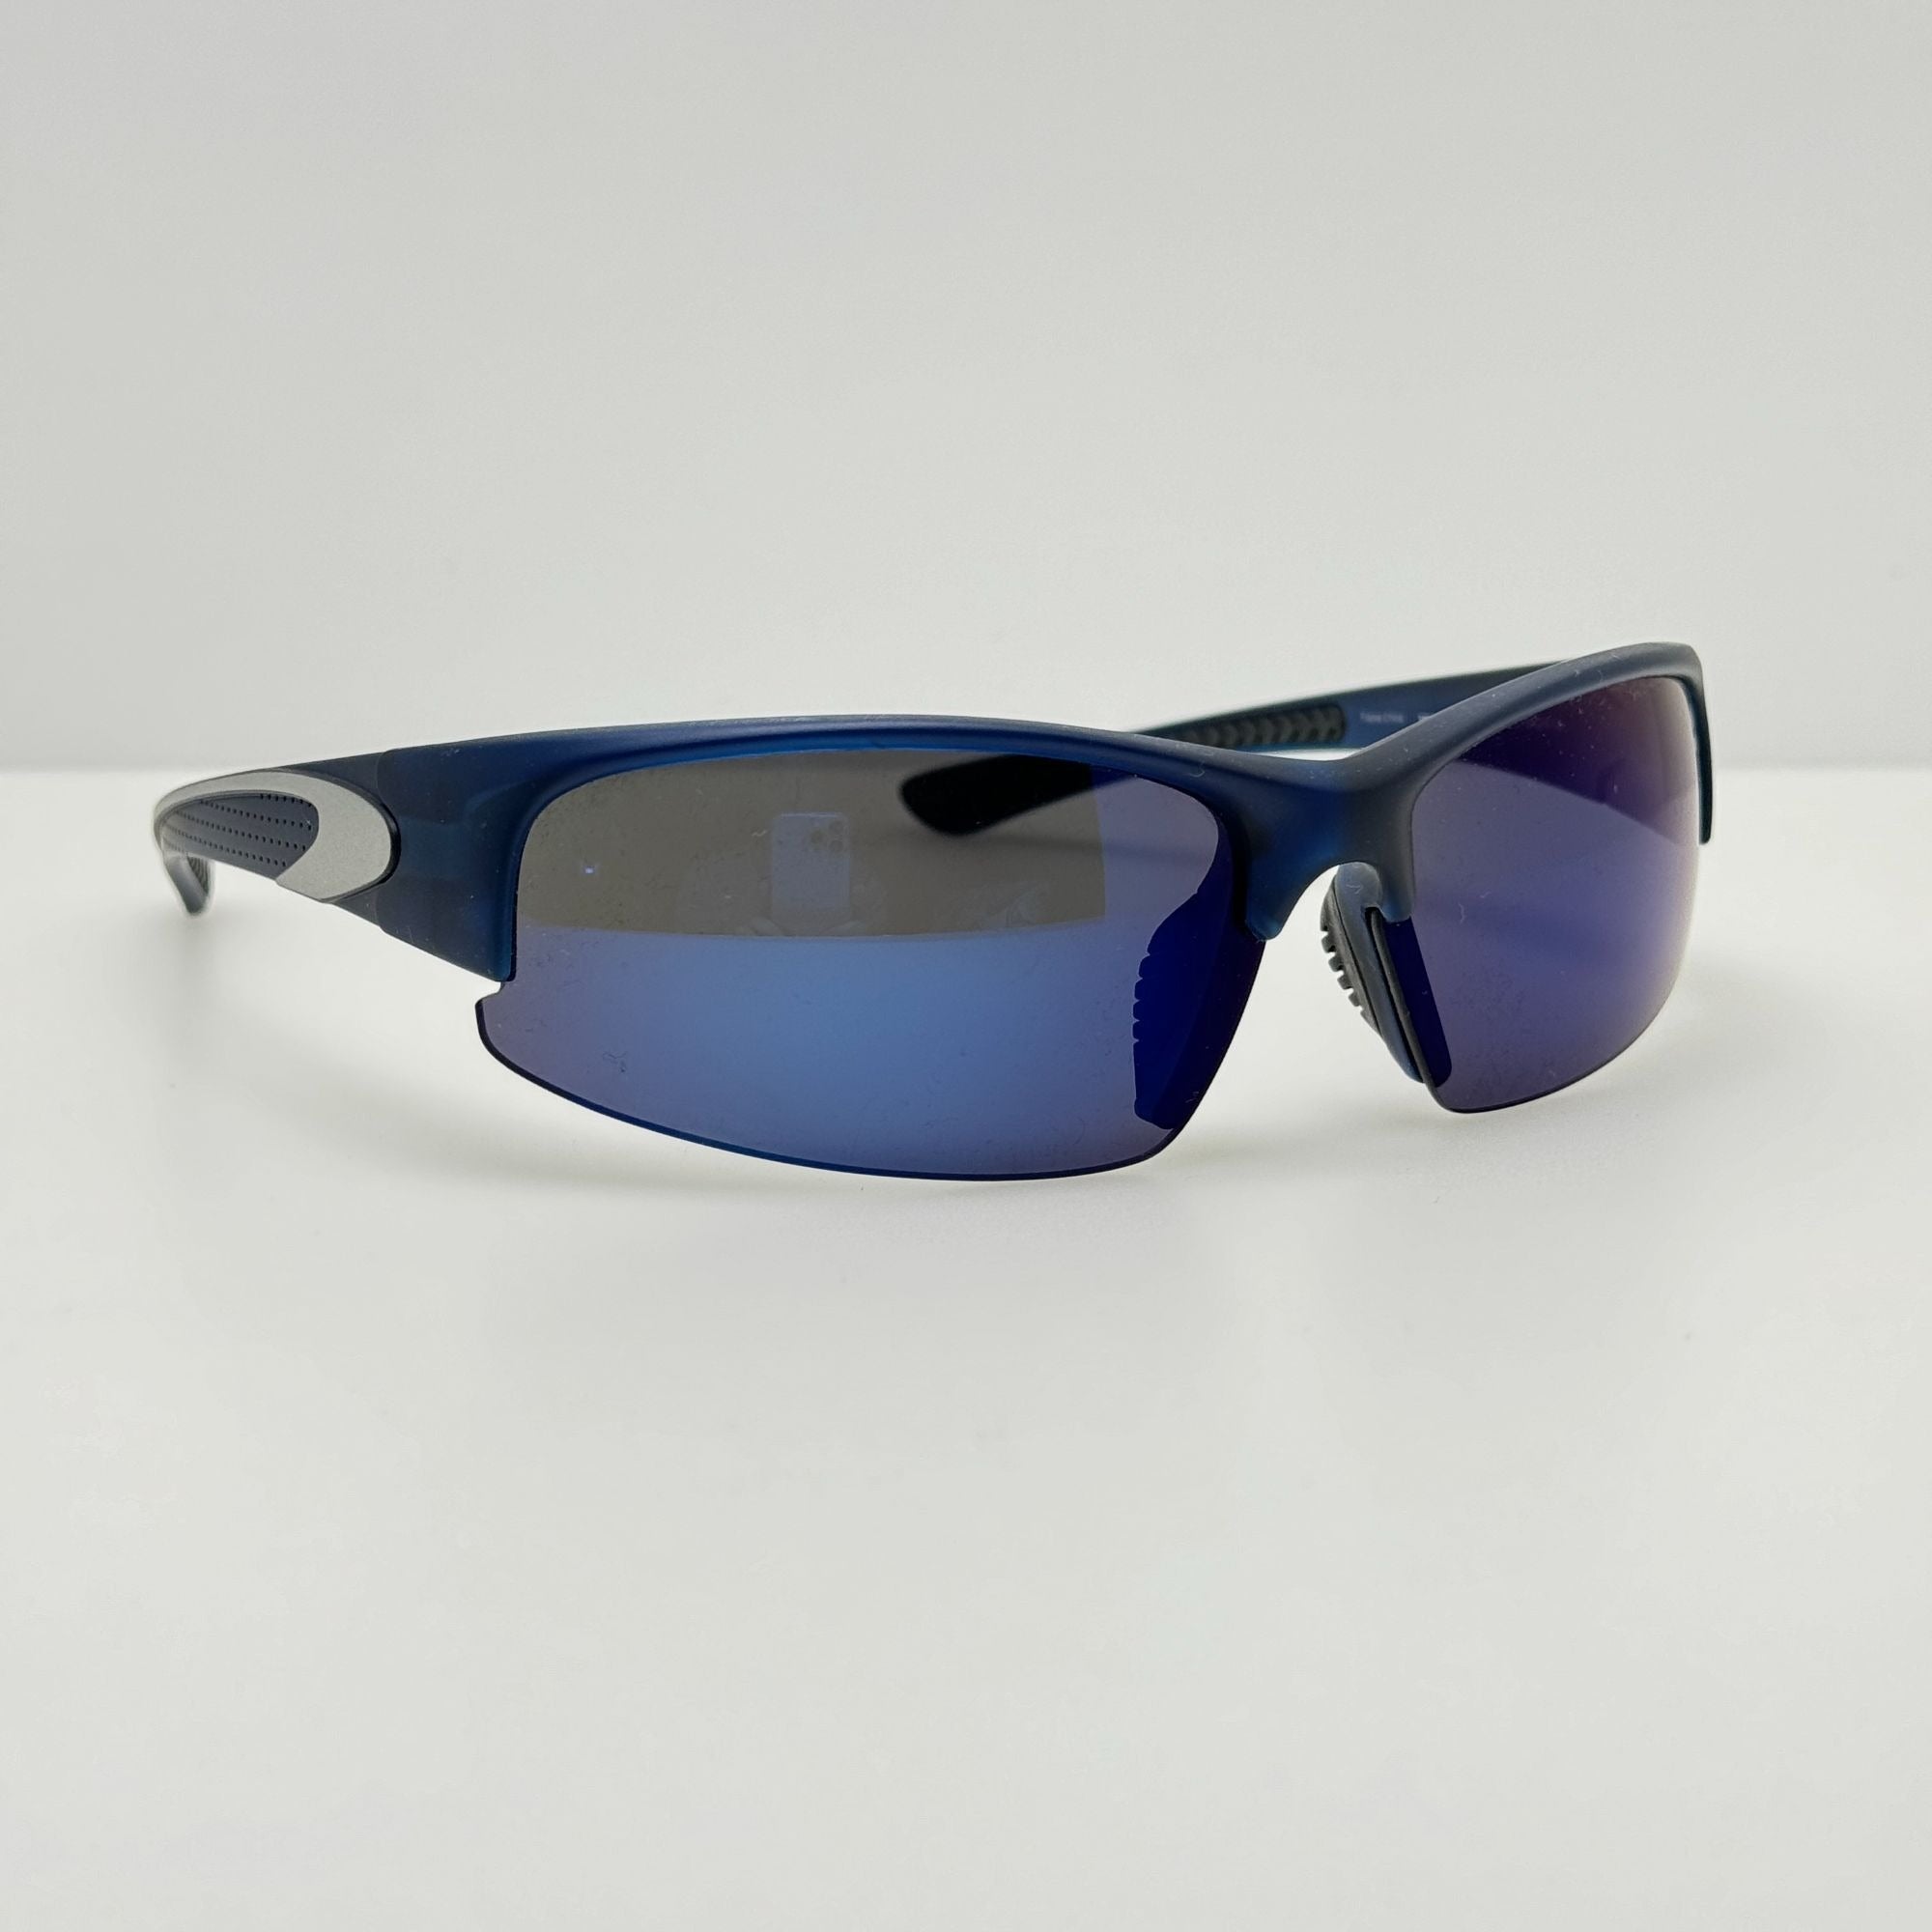 Timberland-Sunglasses-TB9047-Col.-91D-Polarized-69-16-136-Sunglasses